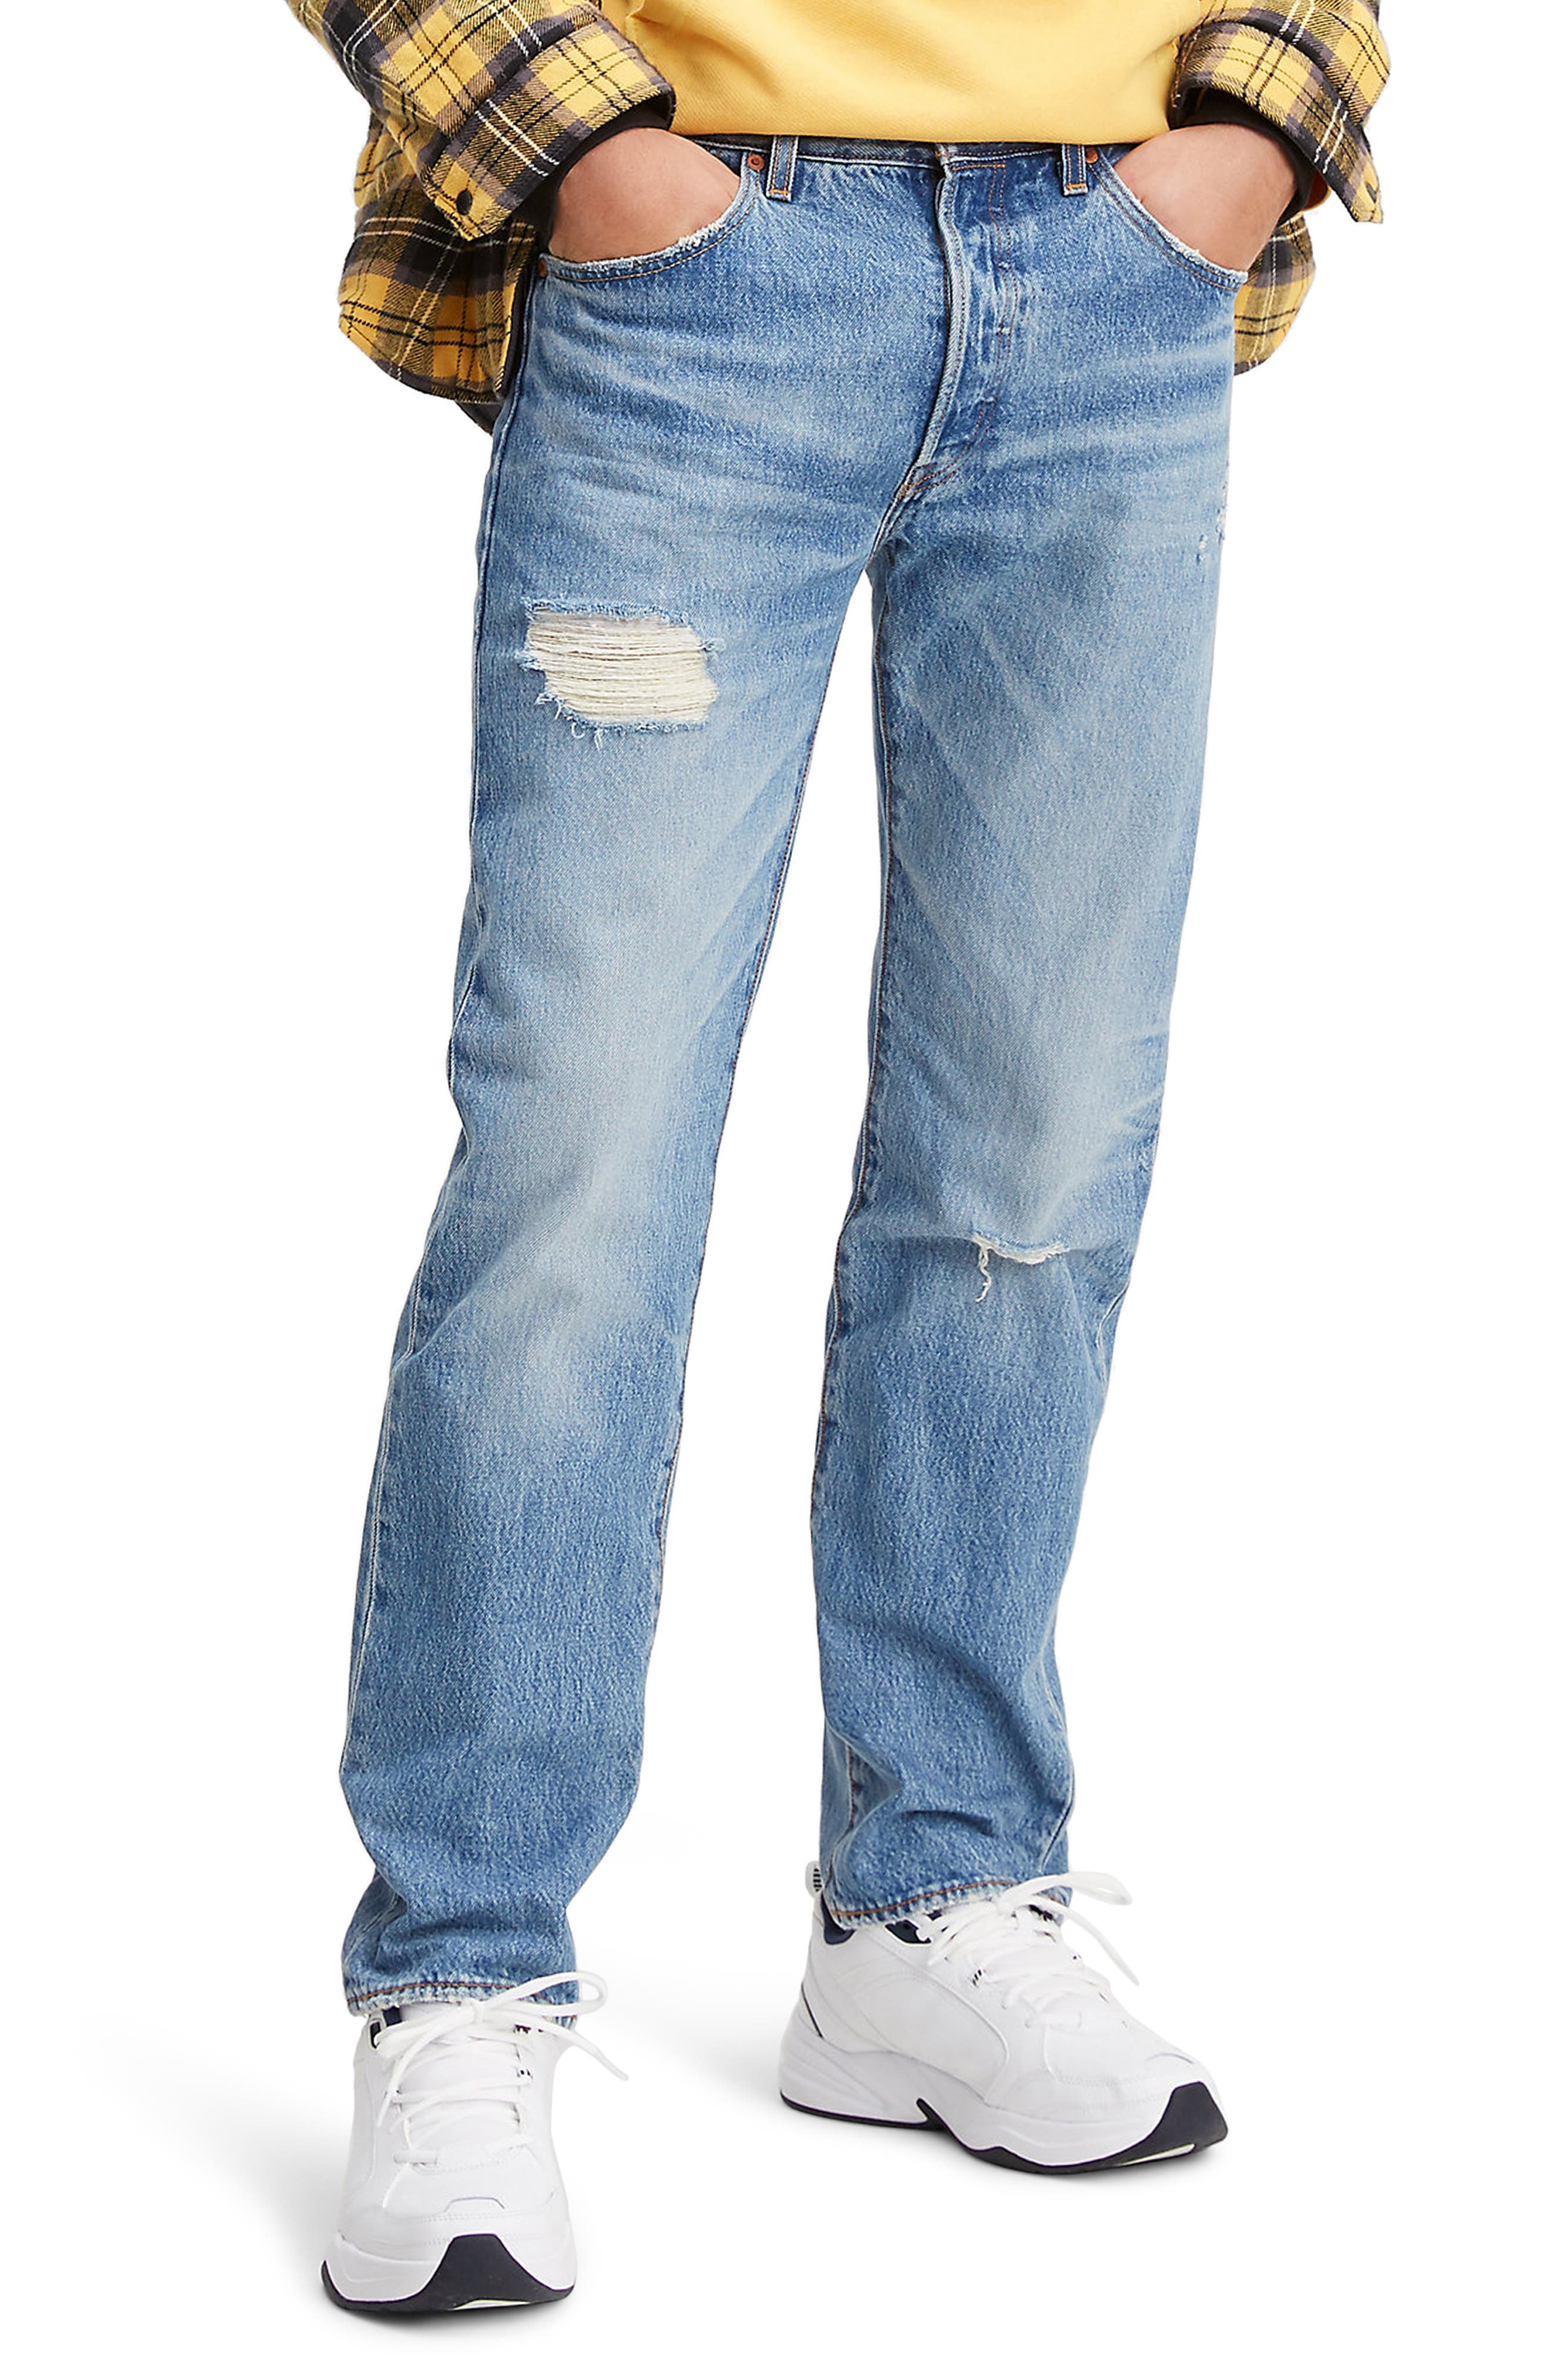 mens levi's 501 distressed jeans